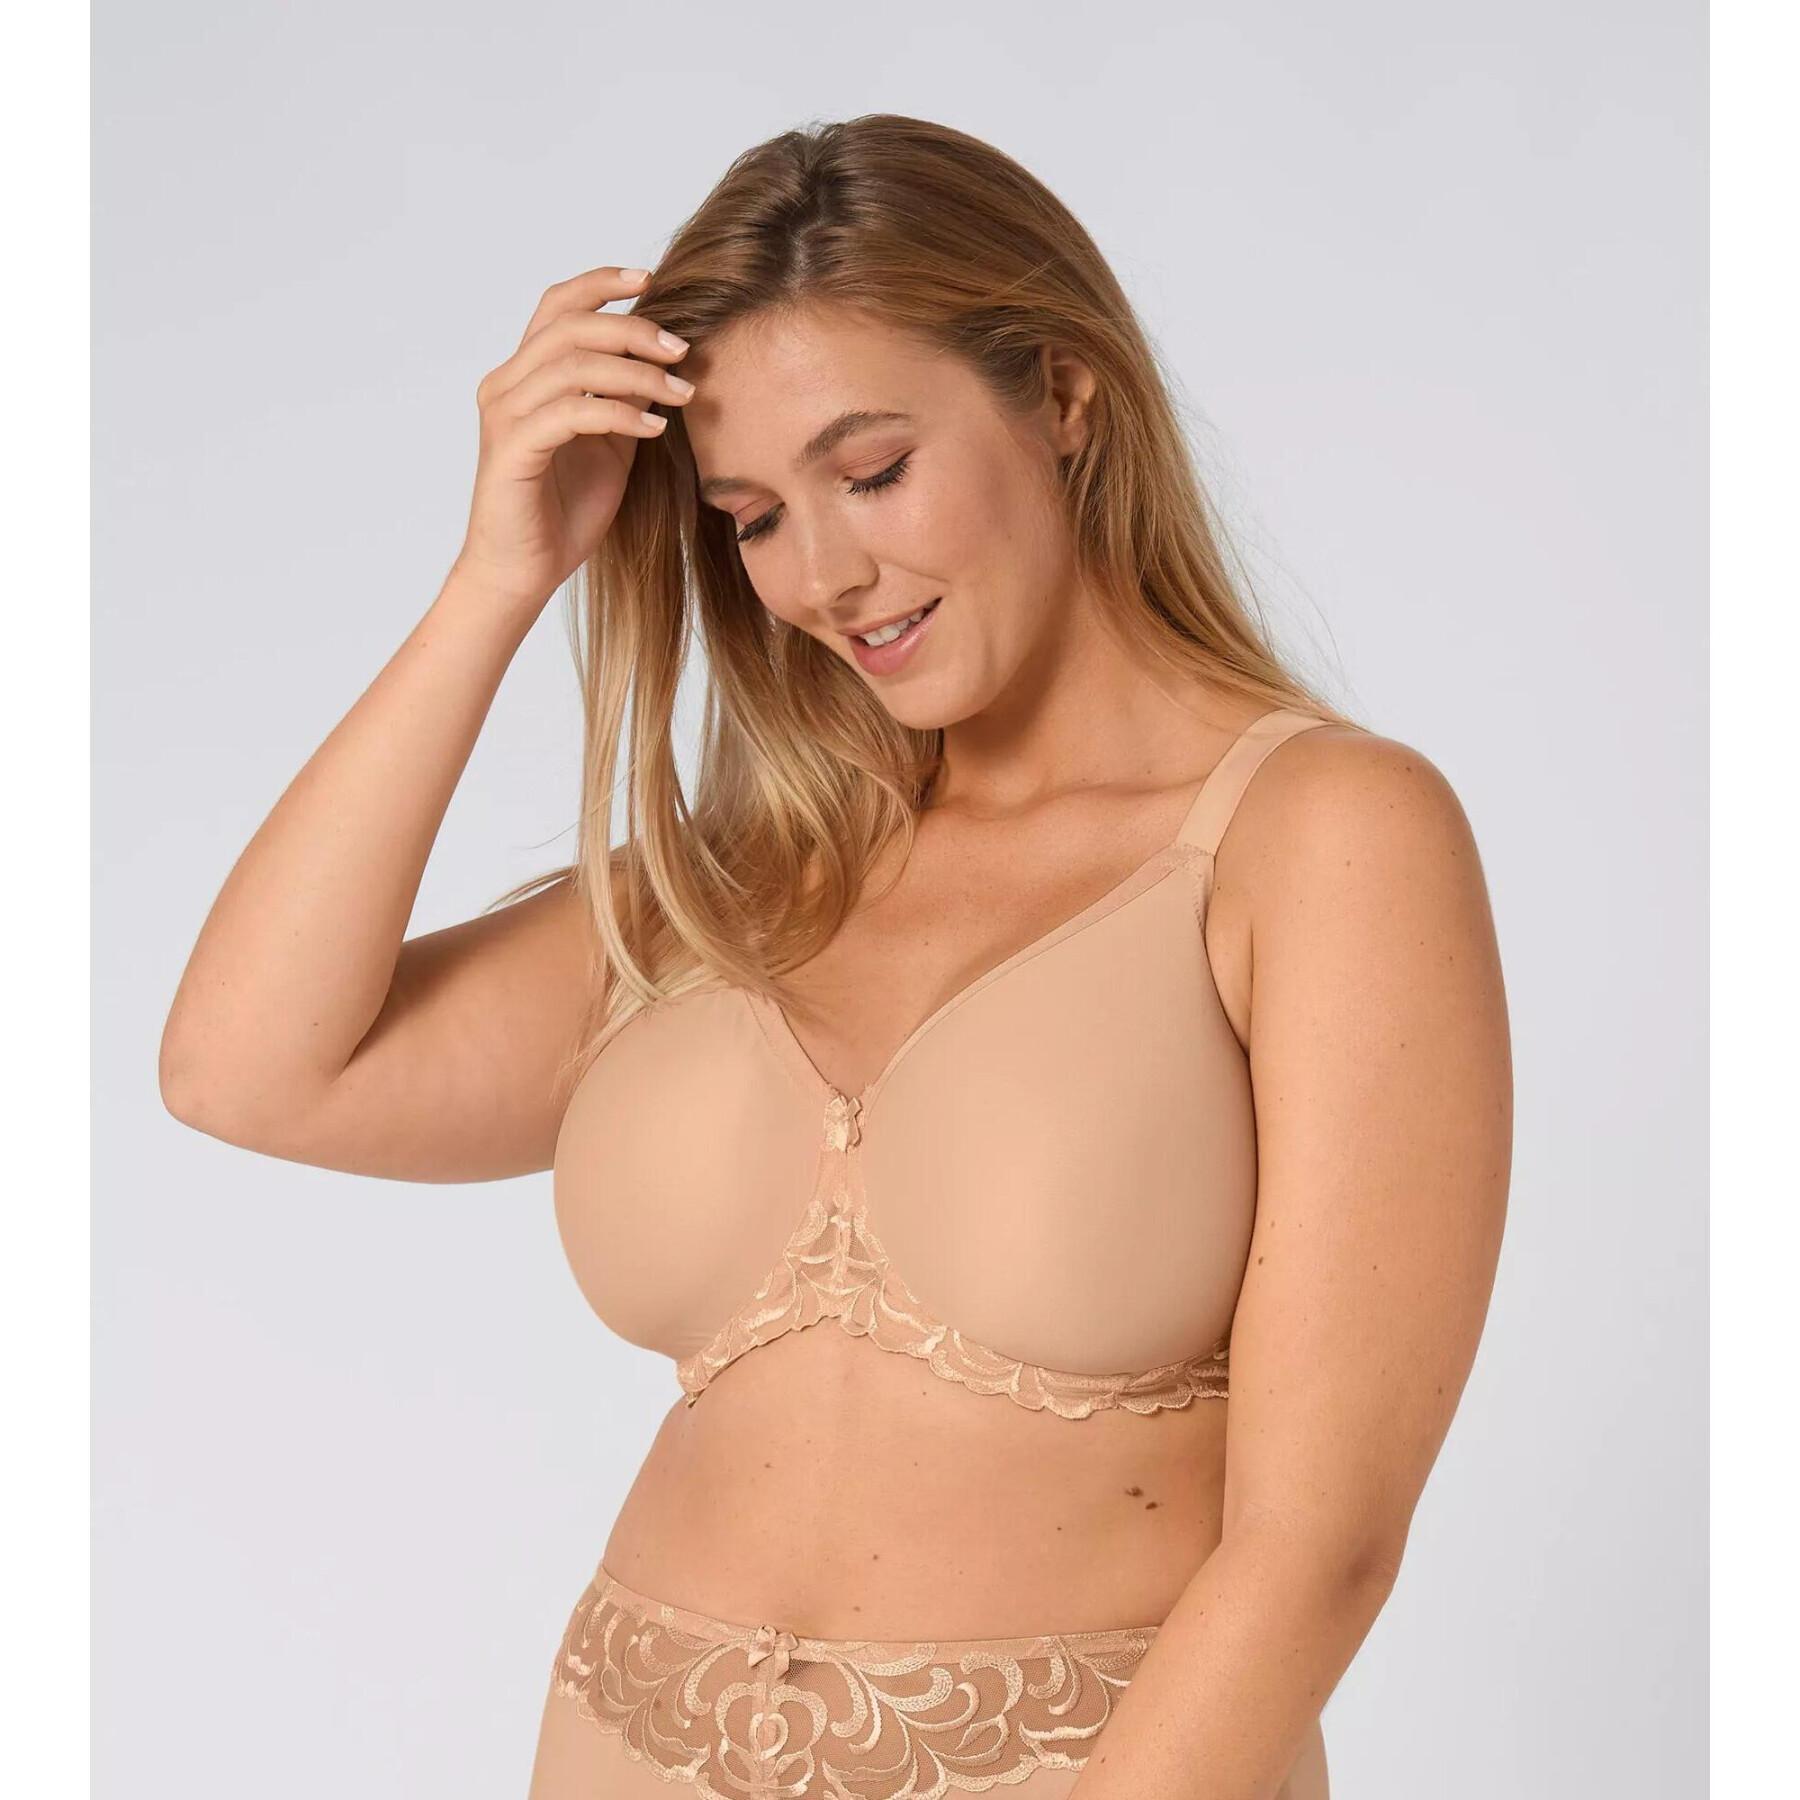 Women's bra Triumph Modern Finesse W01 - Underwears - Woman - Lifestyle